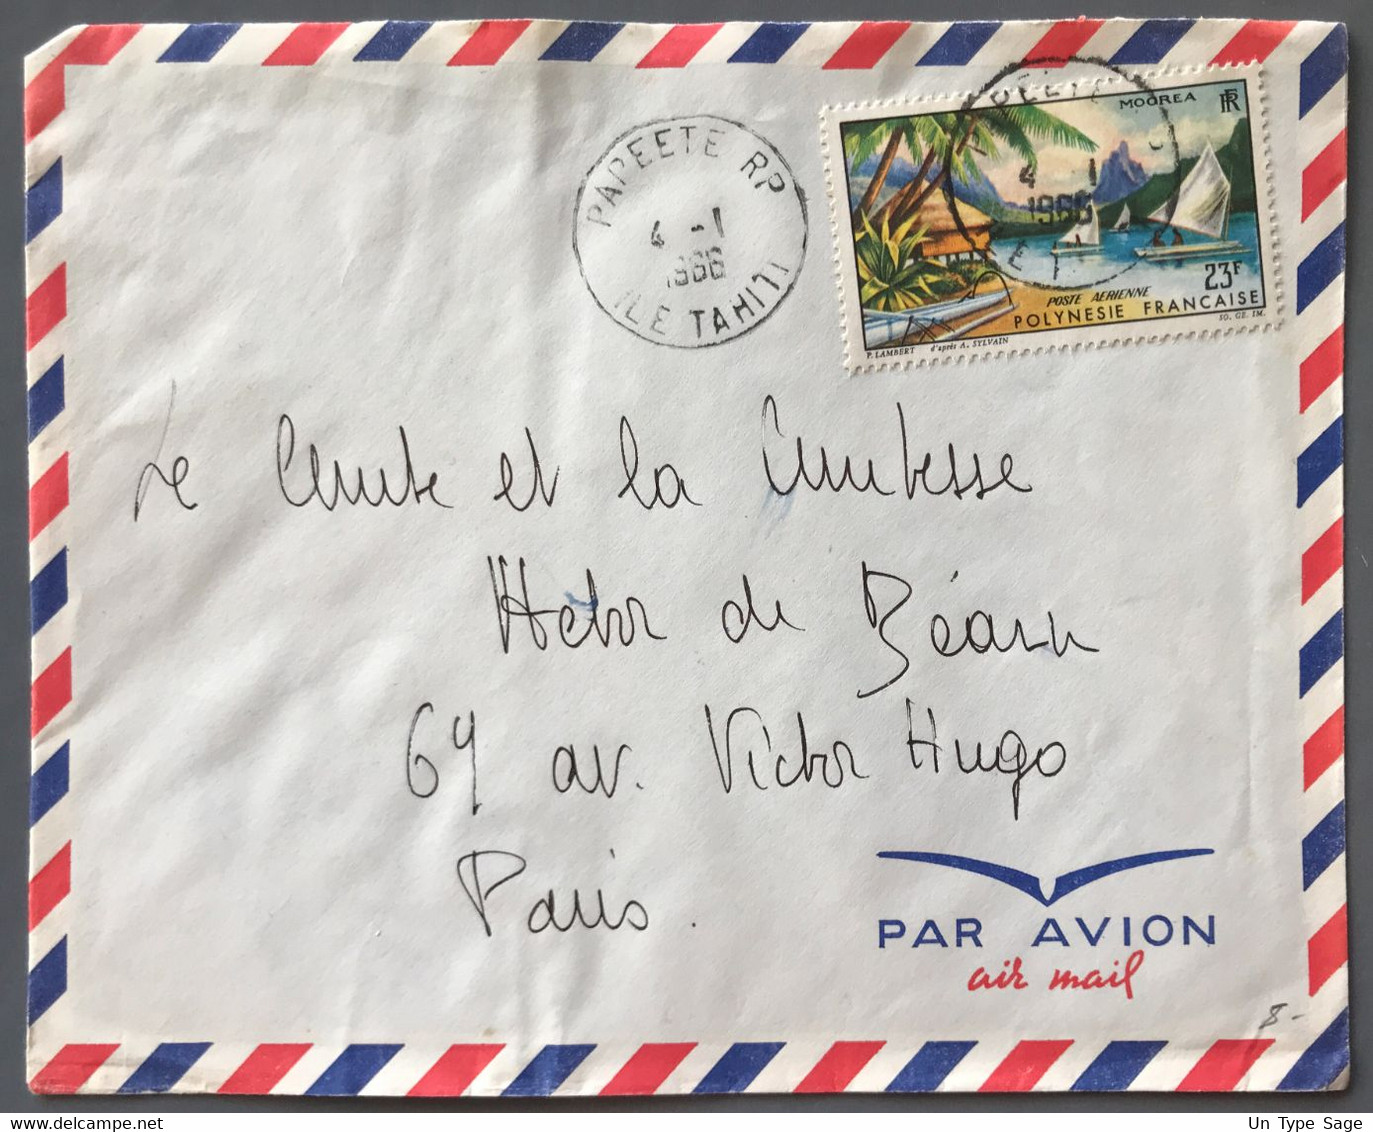 Polynésie Française PA N°9 Sur Enveloppe TAD Papeete R.P. Tahiti 4.1.1966 - (B2126) - Brieven En Documenten